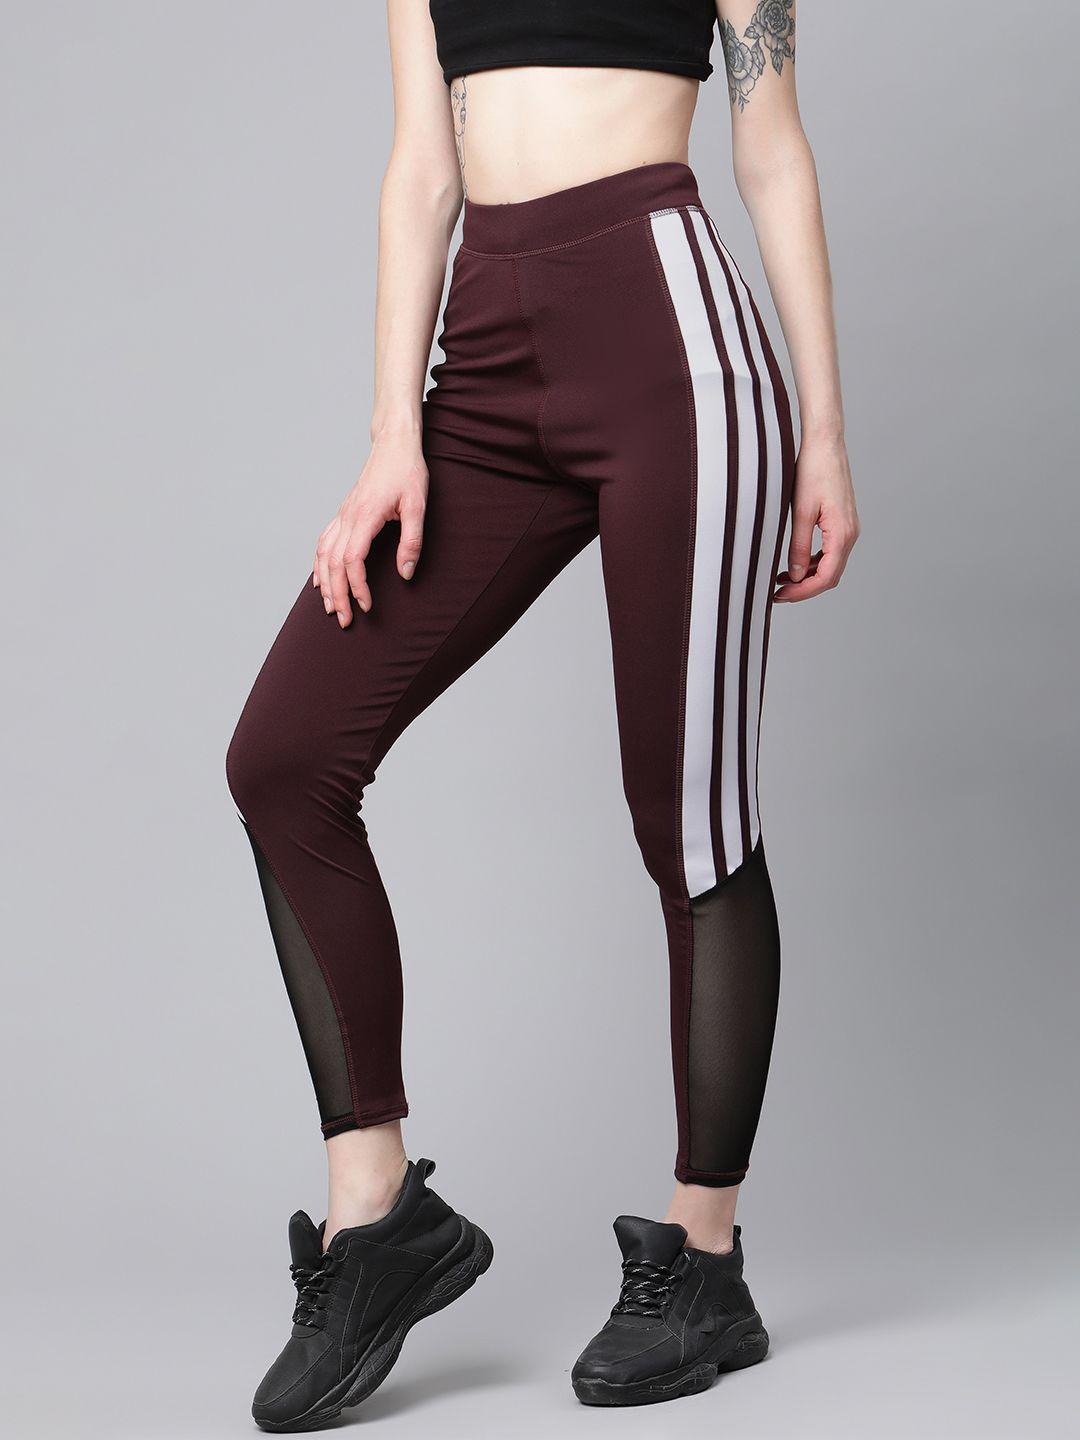 blinkin women burgundy & white high-rise side striped gym tights